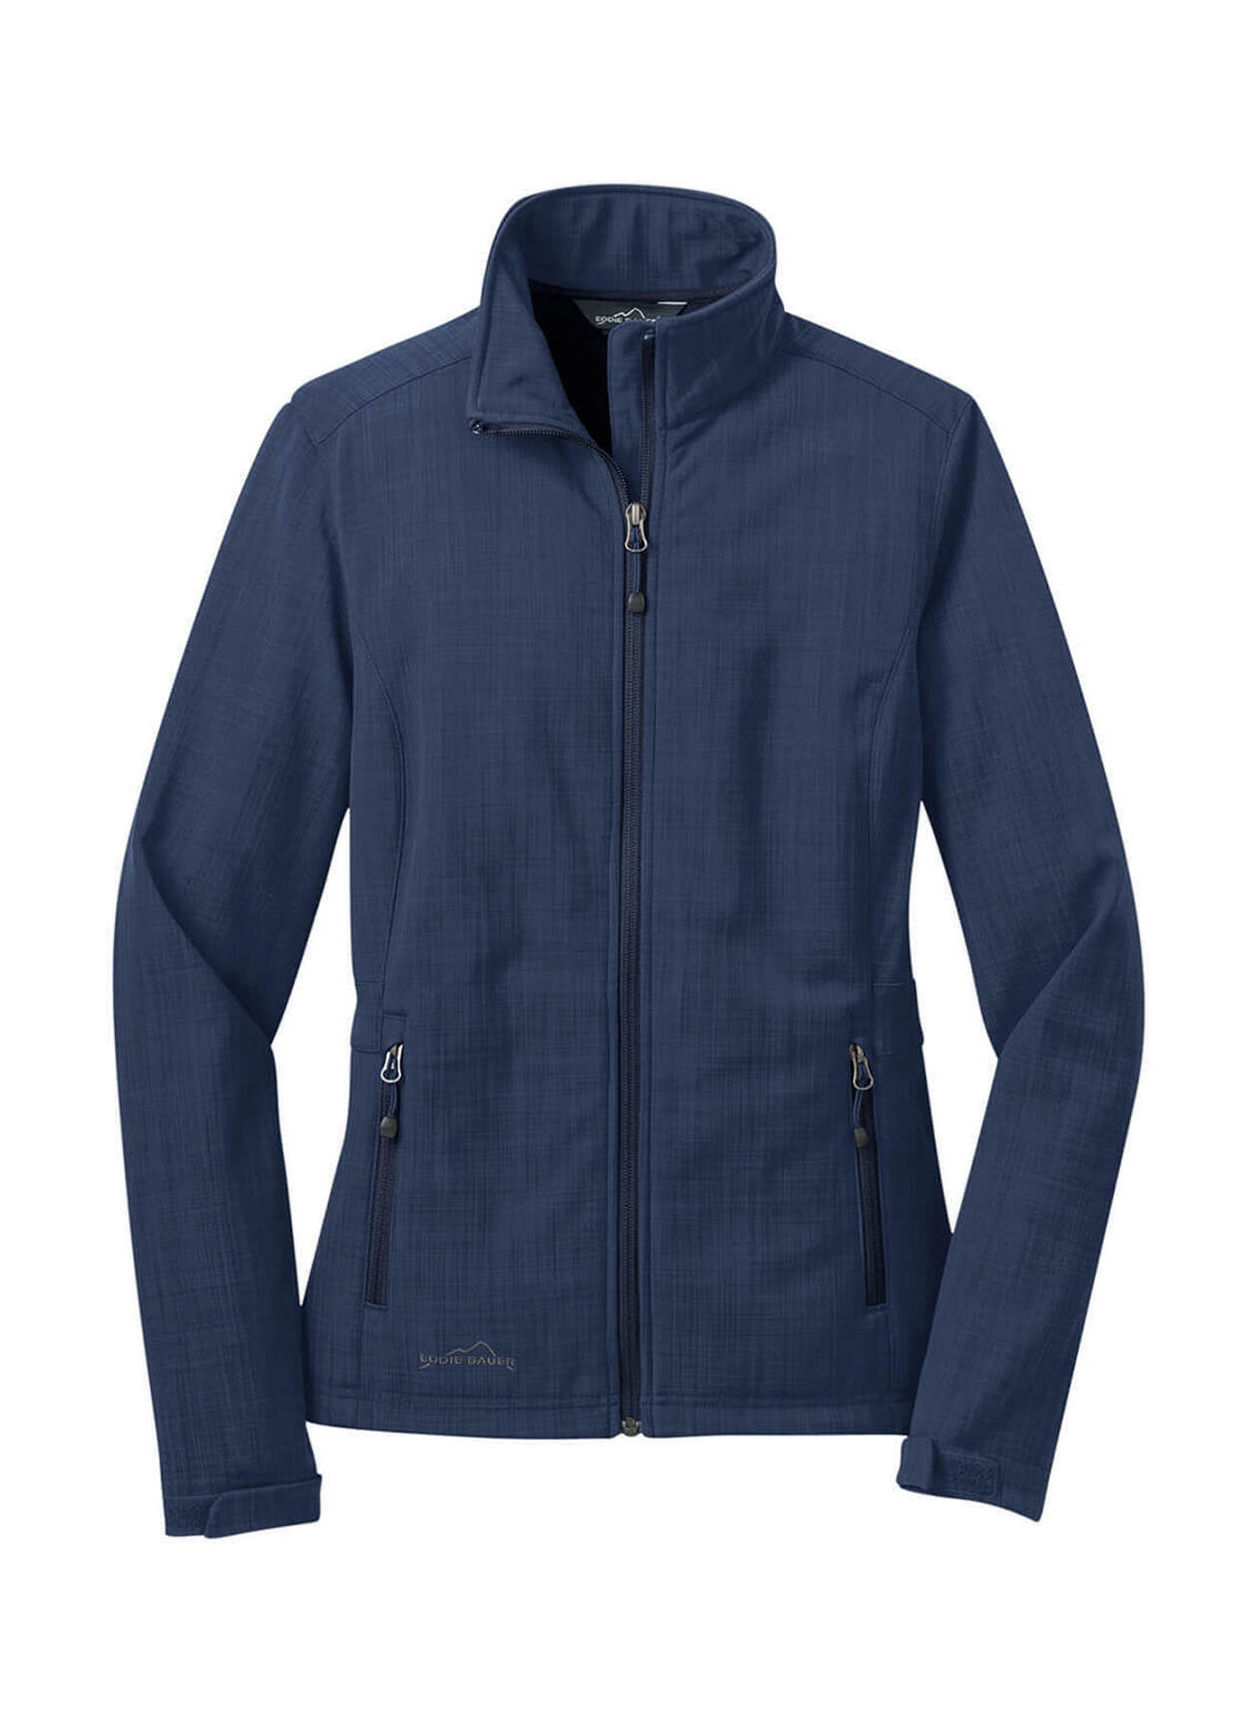 Eddie Bauer Women's Blue Shaded Crosshatch Soft Shell Jacket